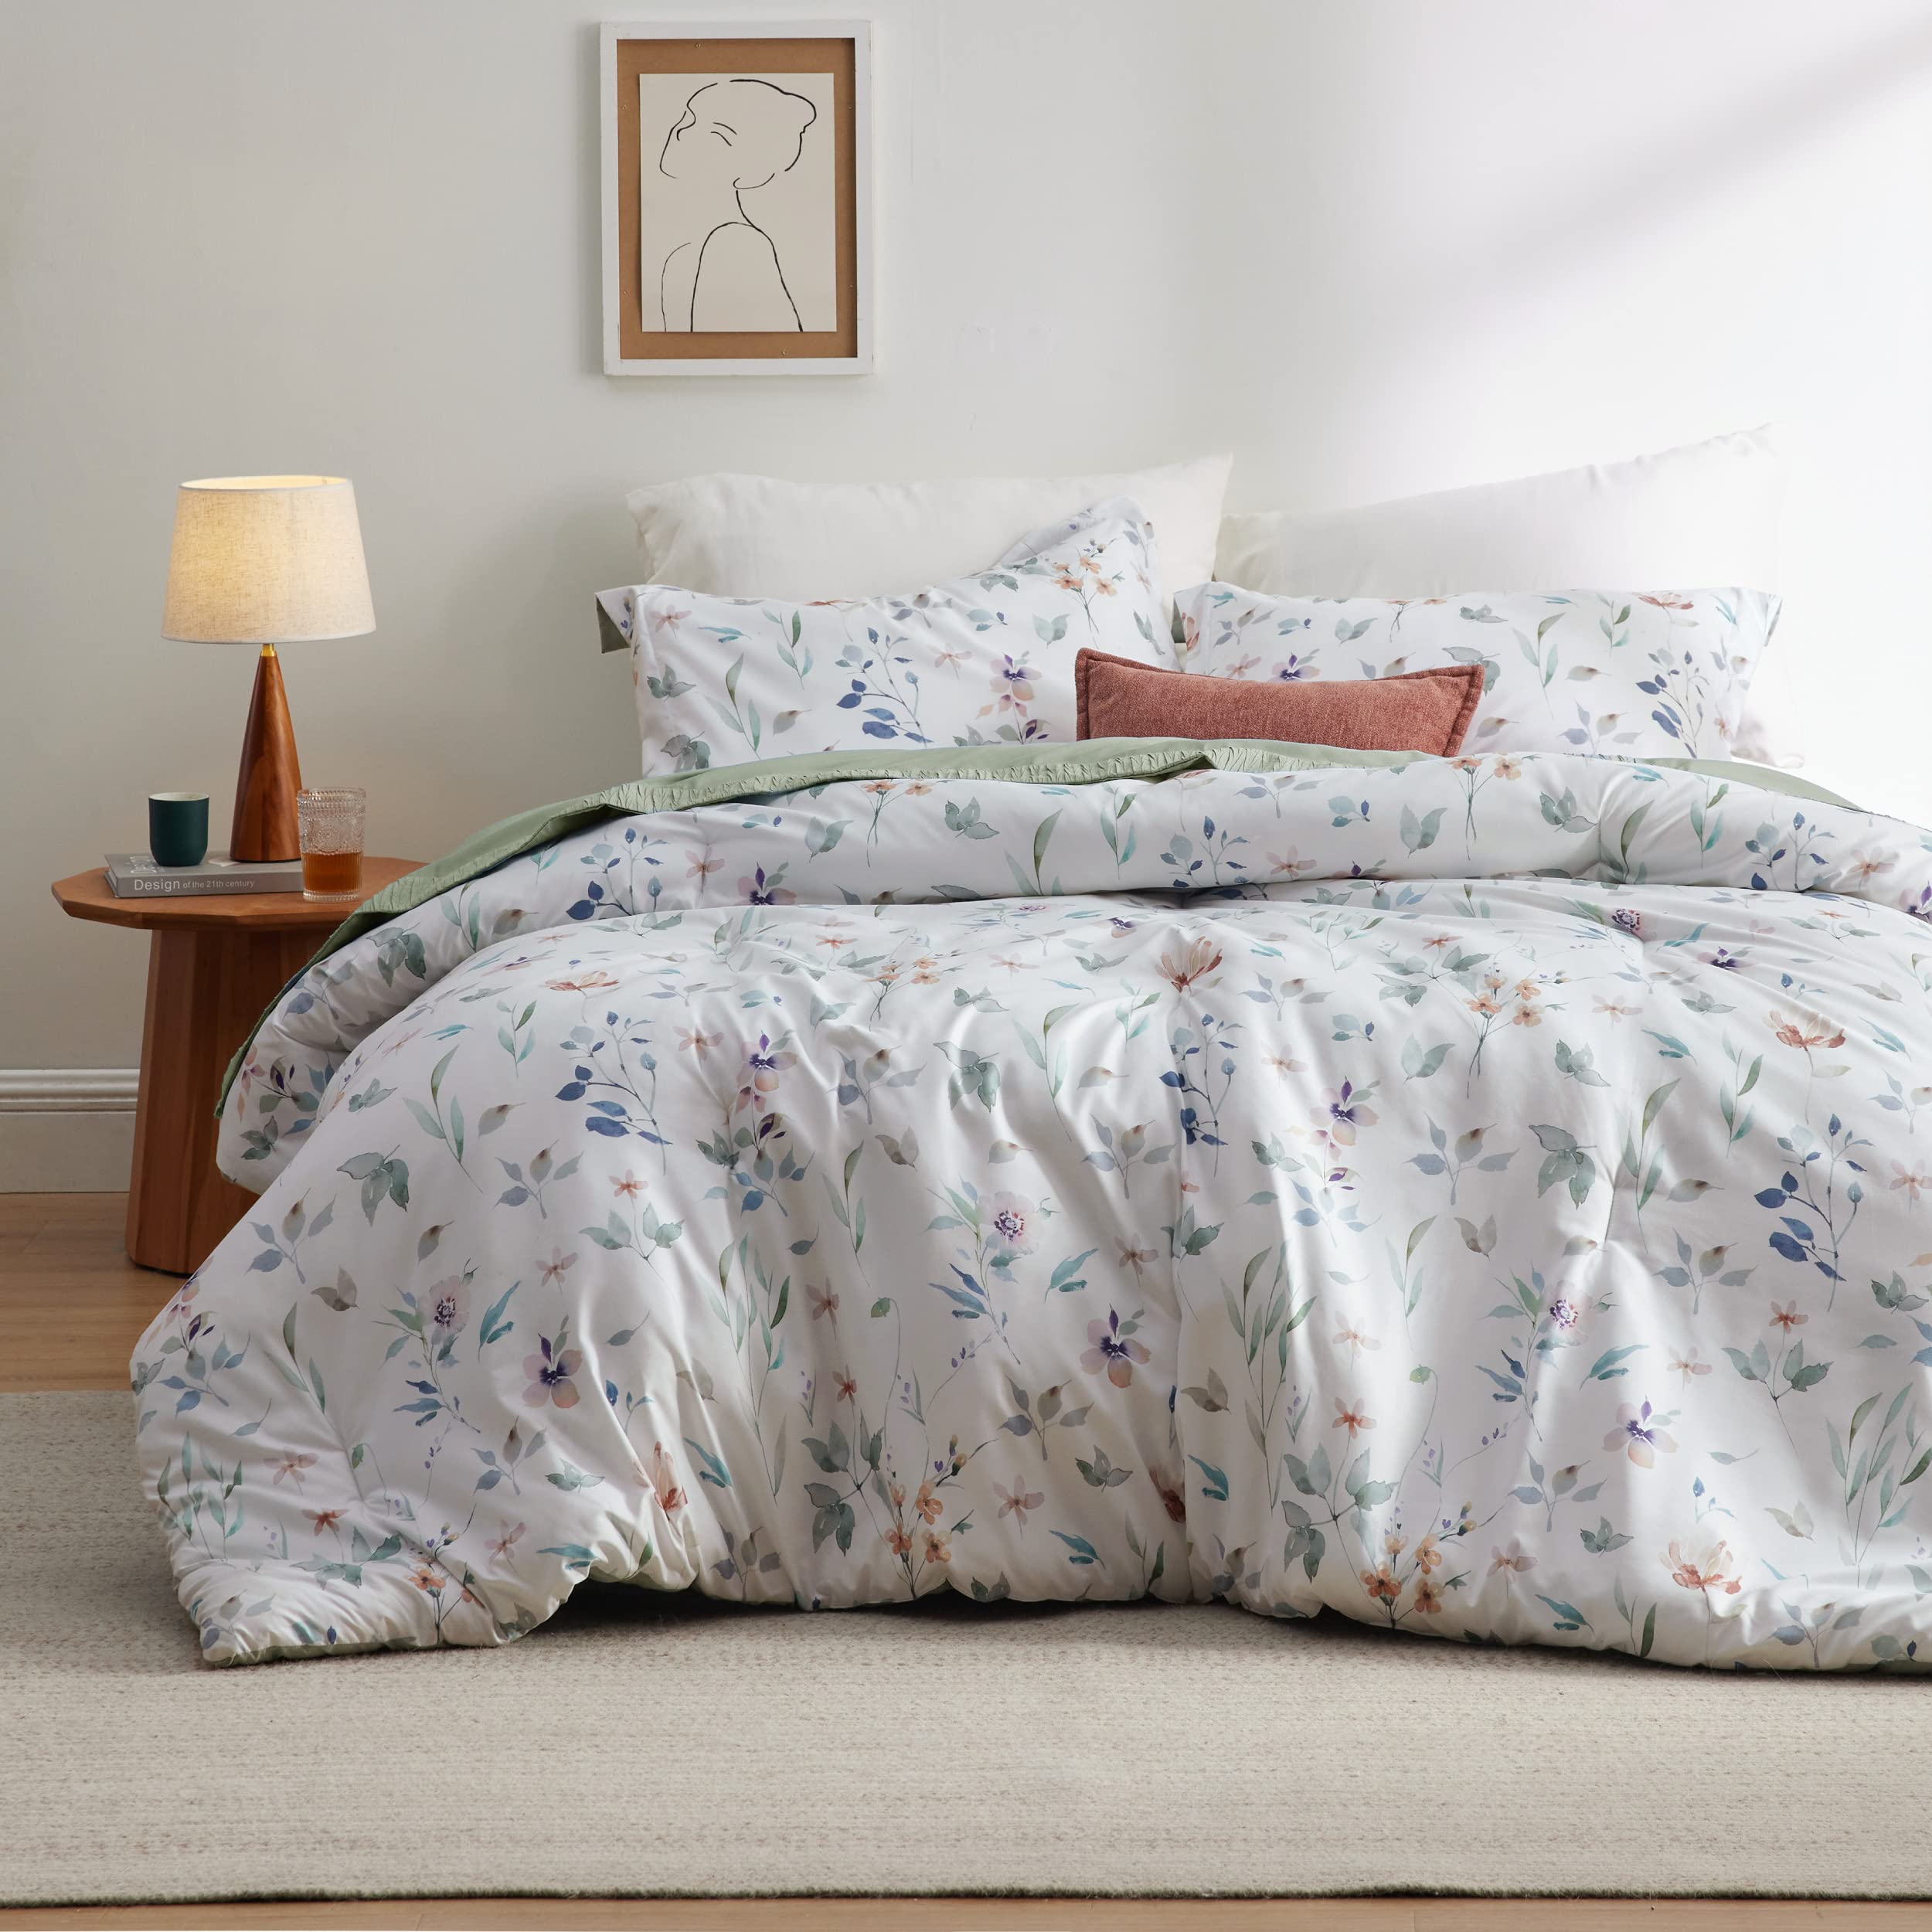 Bedsure Floral Comforter Set - Queen Bedding Botanical Bed Comforter Queen Set, 3 Pieces Lightweight Fluffy Bedding Set, Include